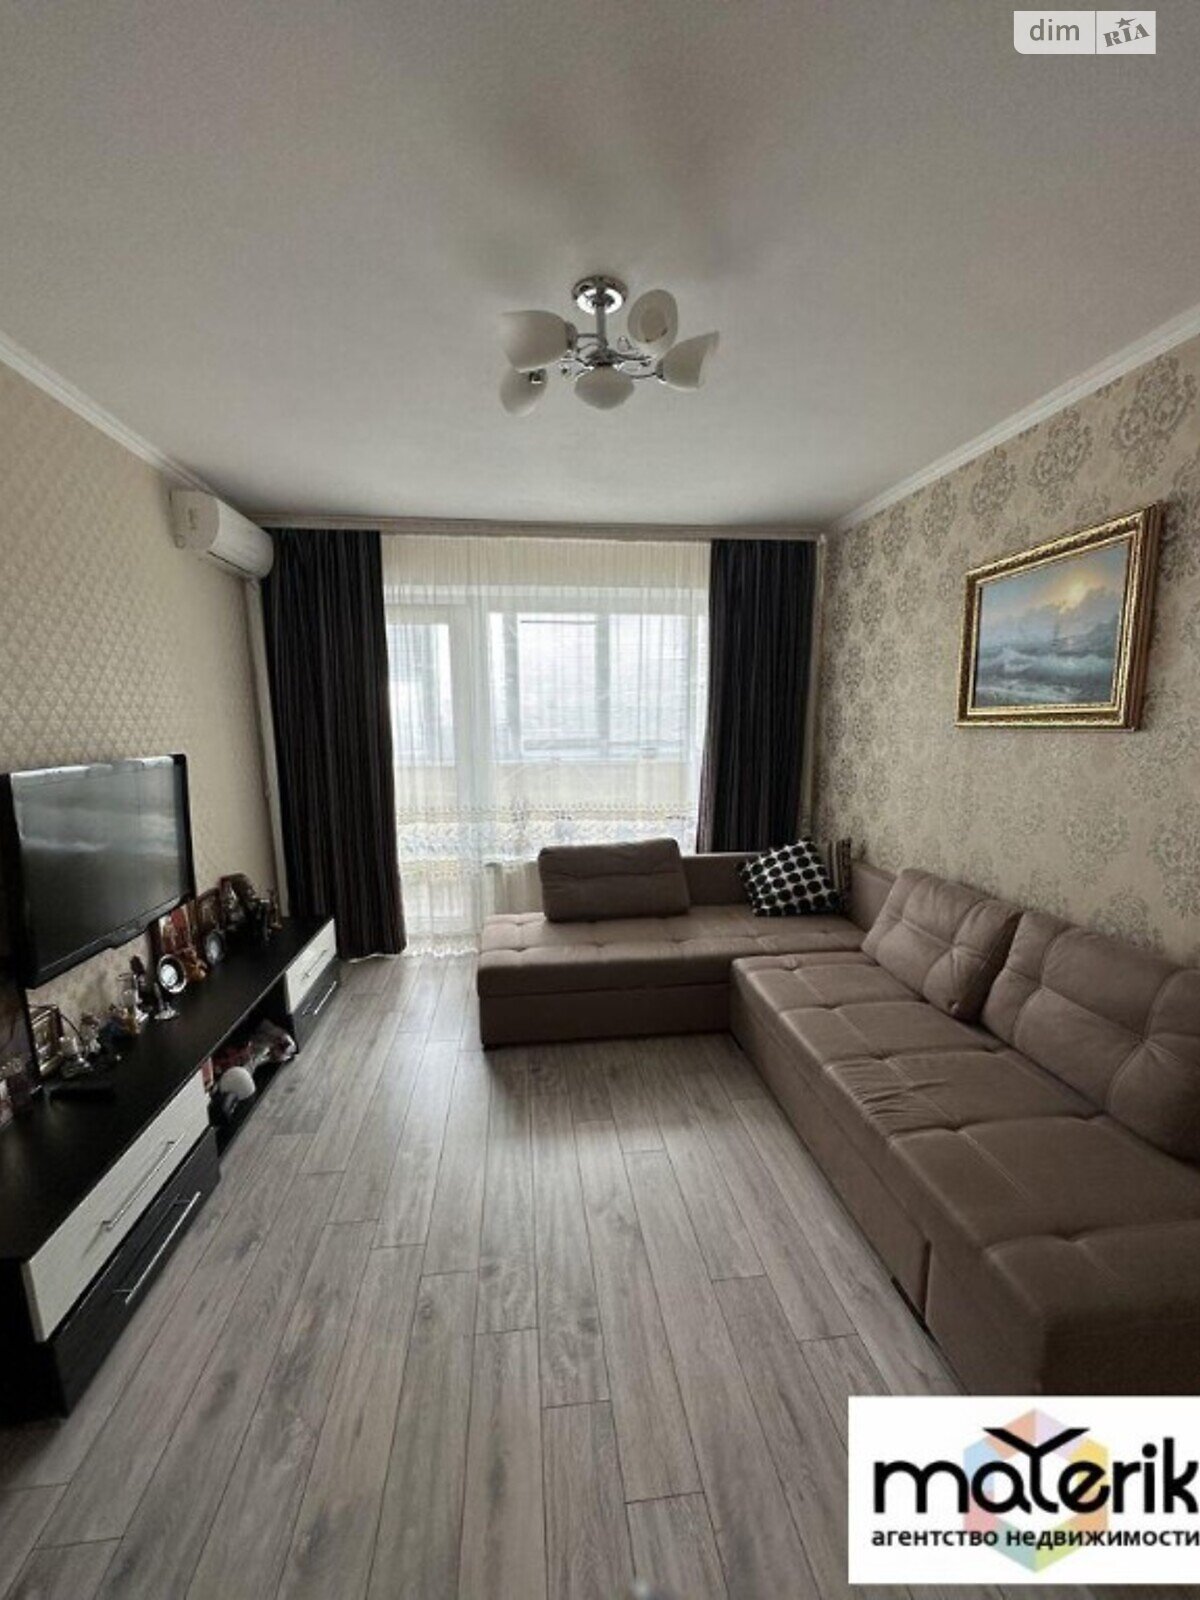 Продажа трехкомнатной квартиры в Одессе, на ул. Бугаевская, район Бугаёвка фото 1